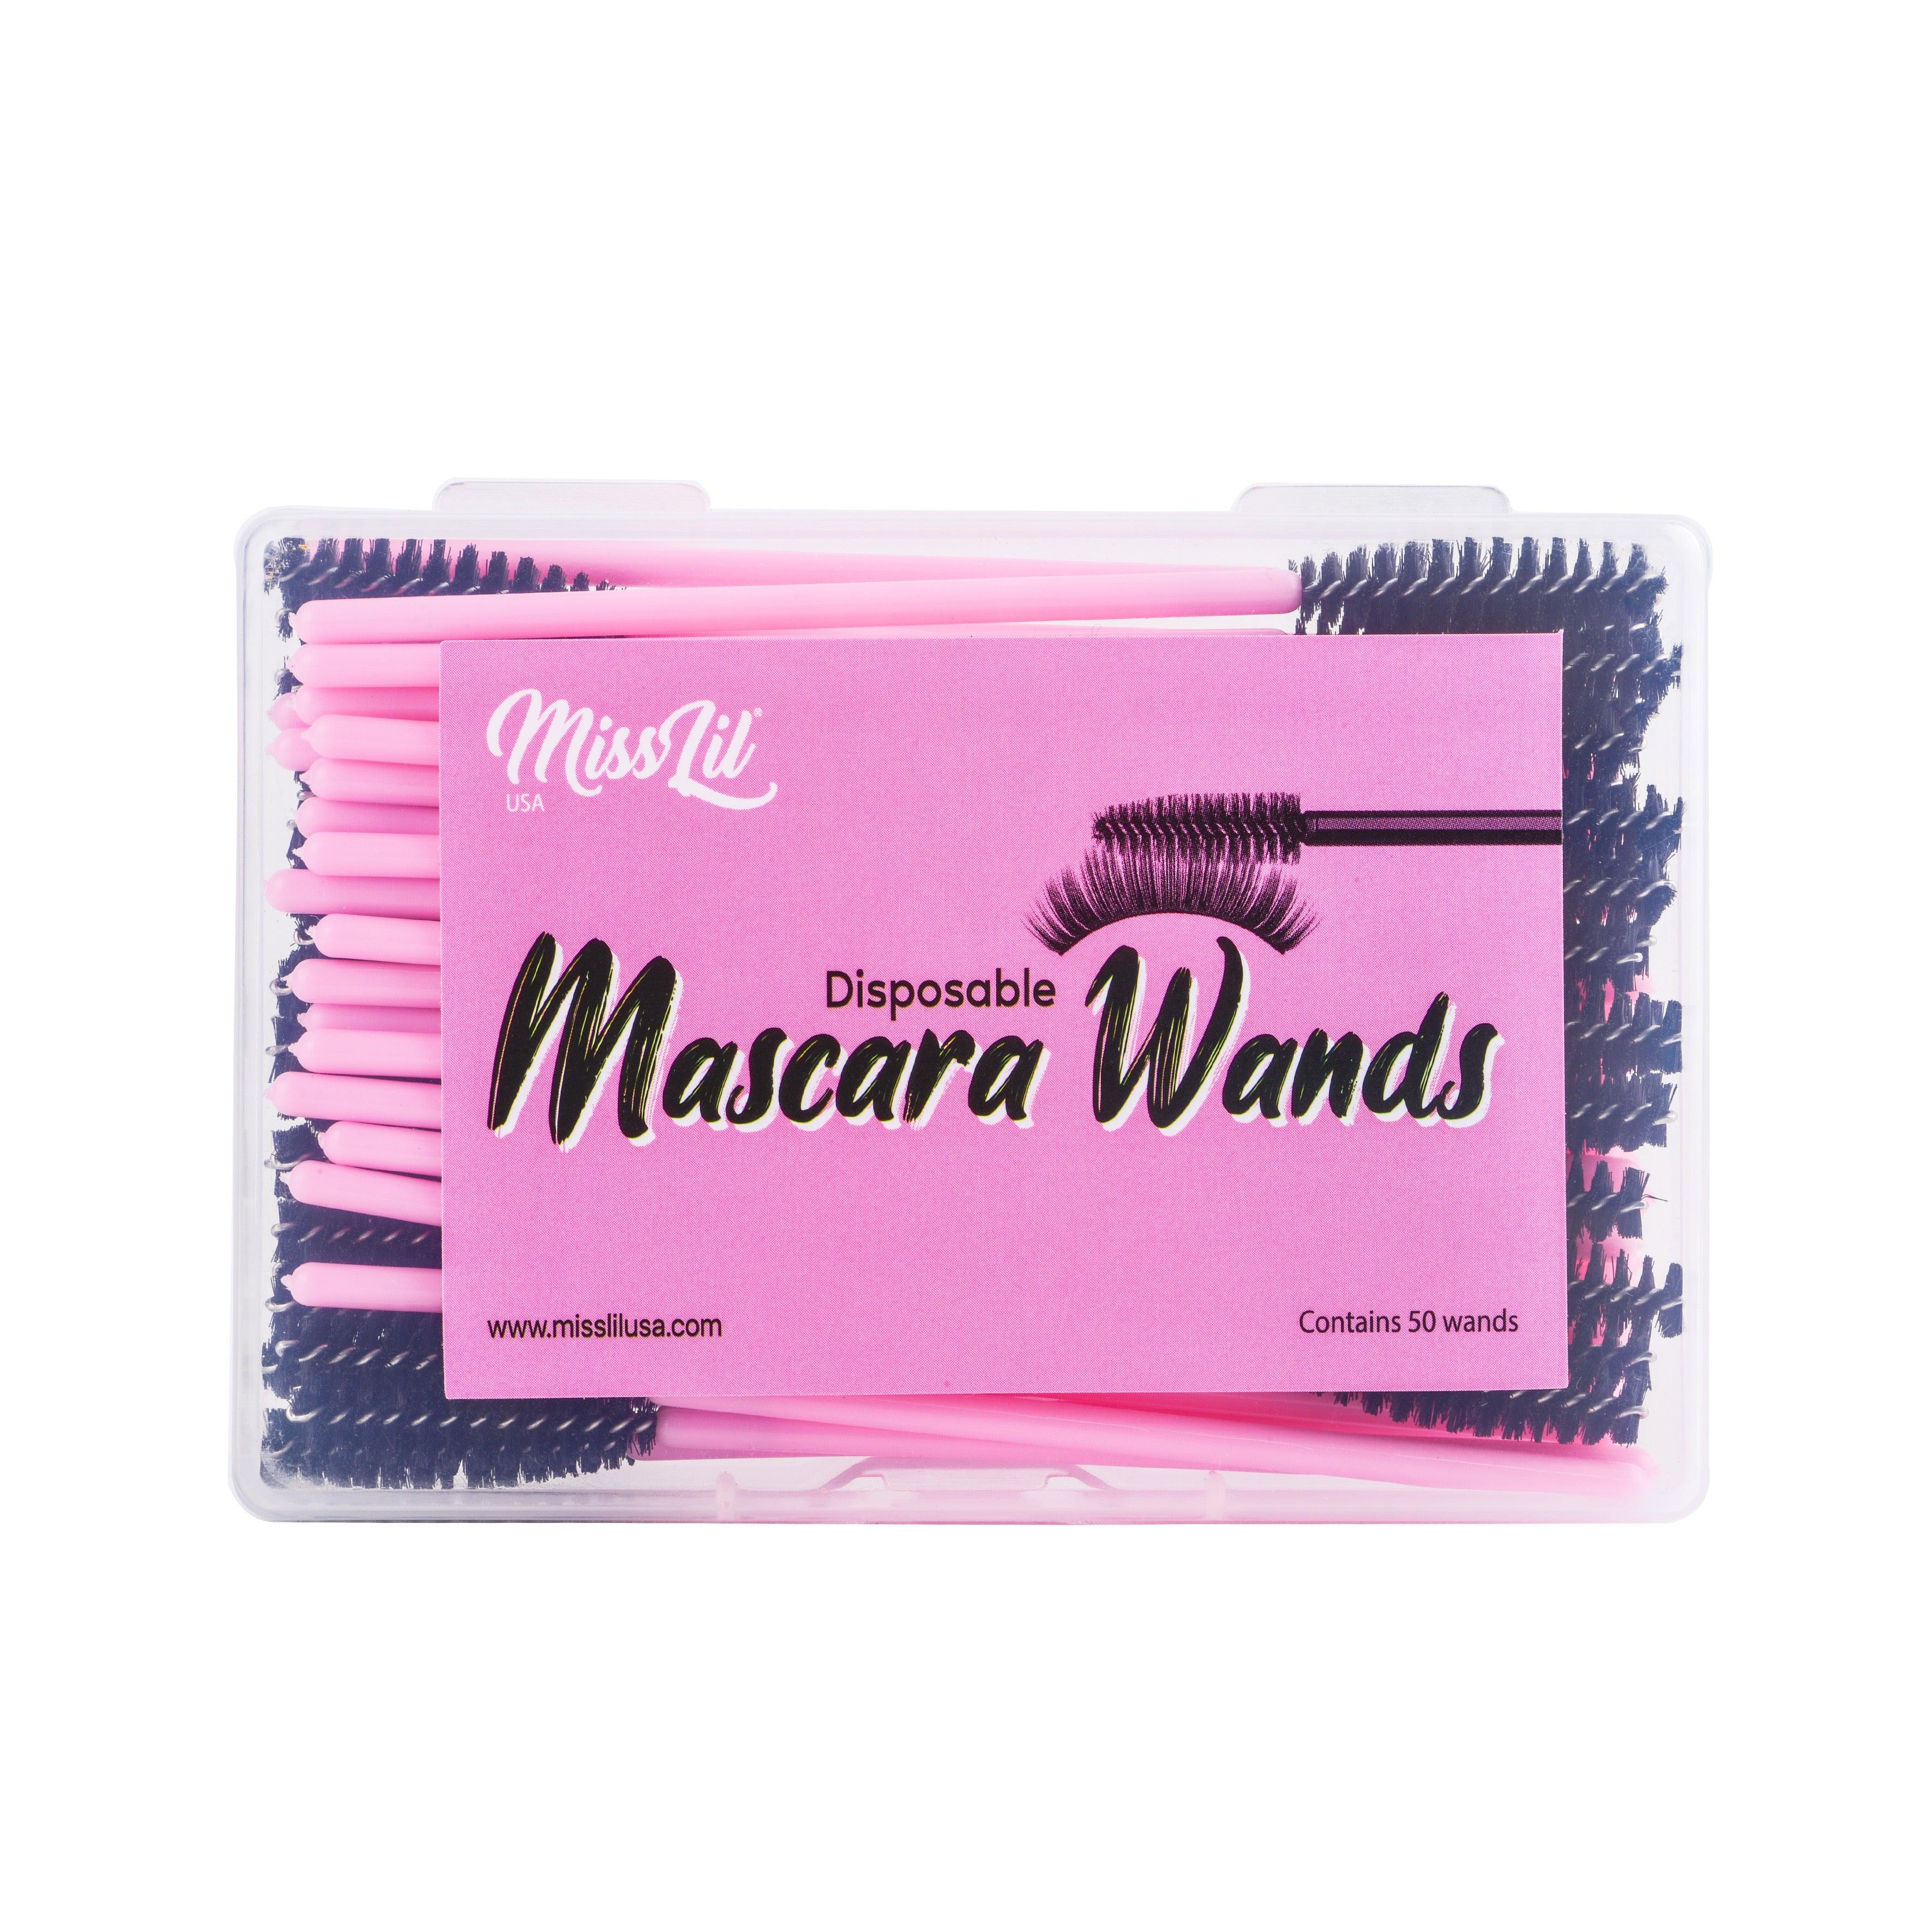 Mascara Wands 100 Pcs - Miss Lil USA